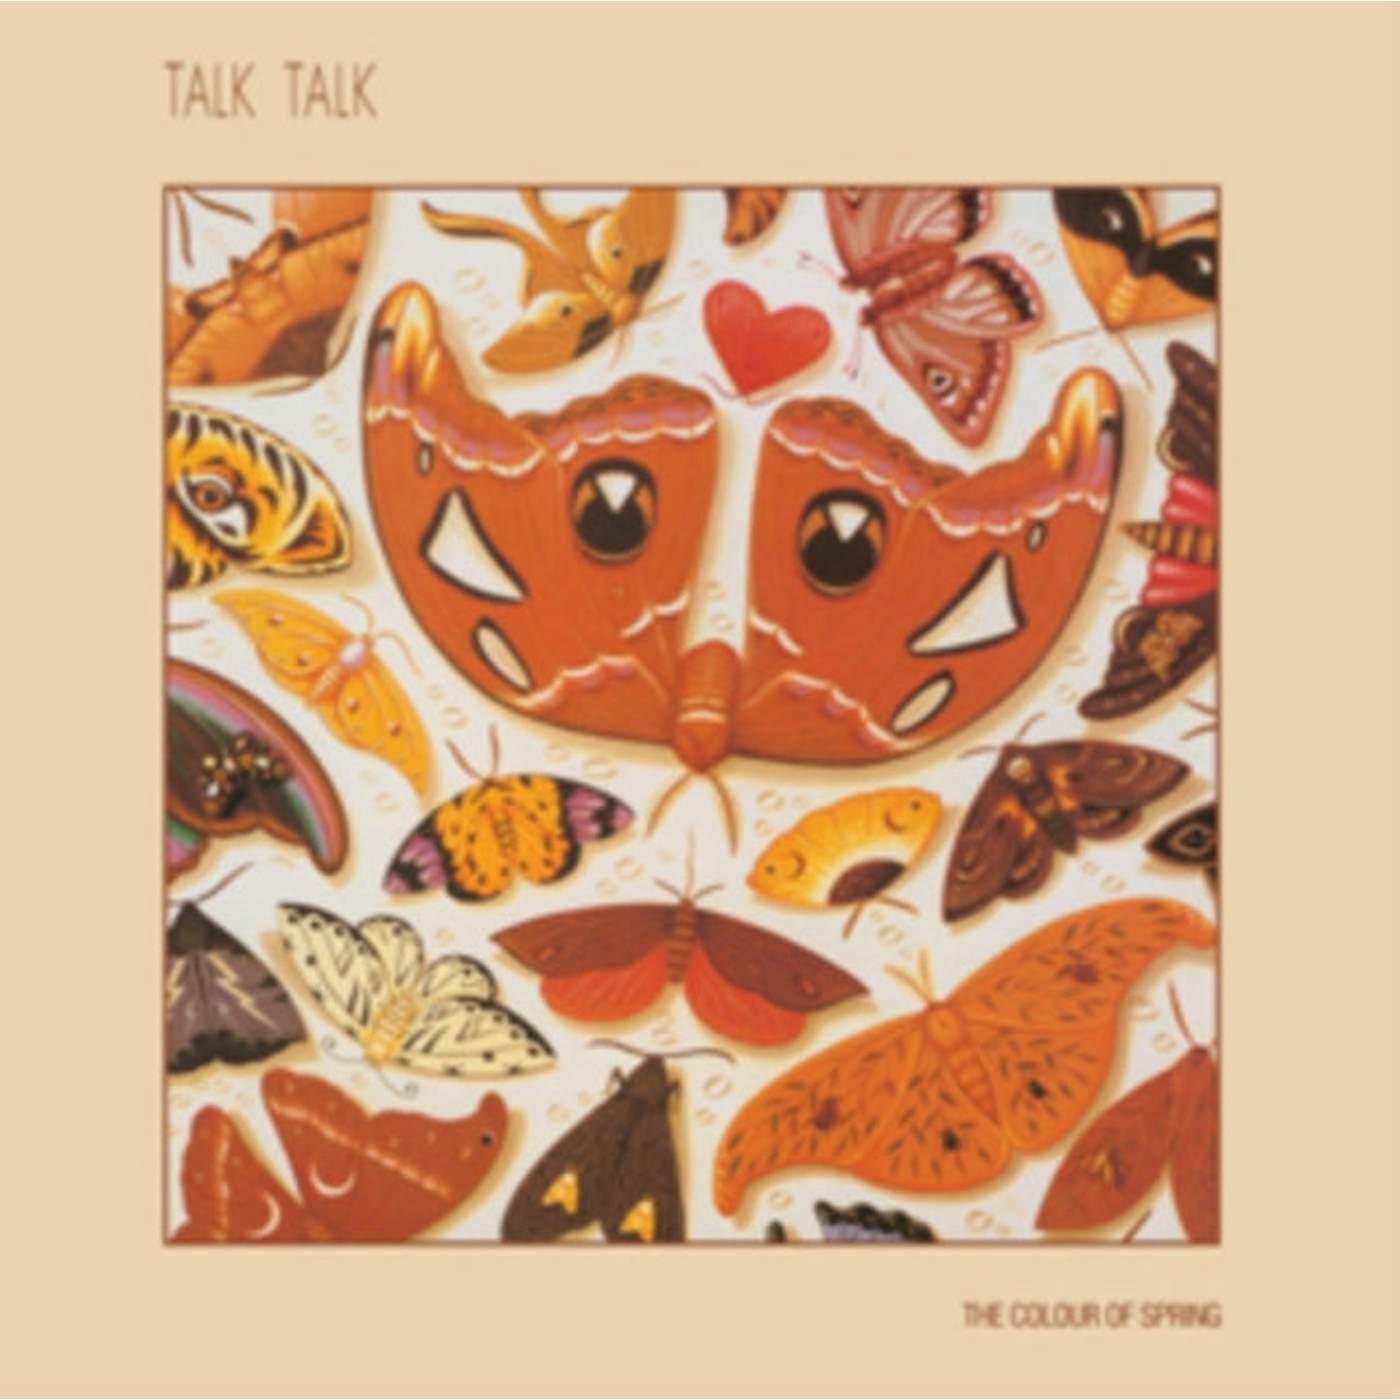 Talk Talk CD - The Colour Of Spring